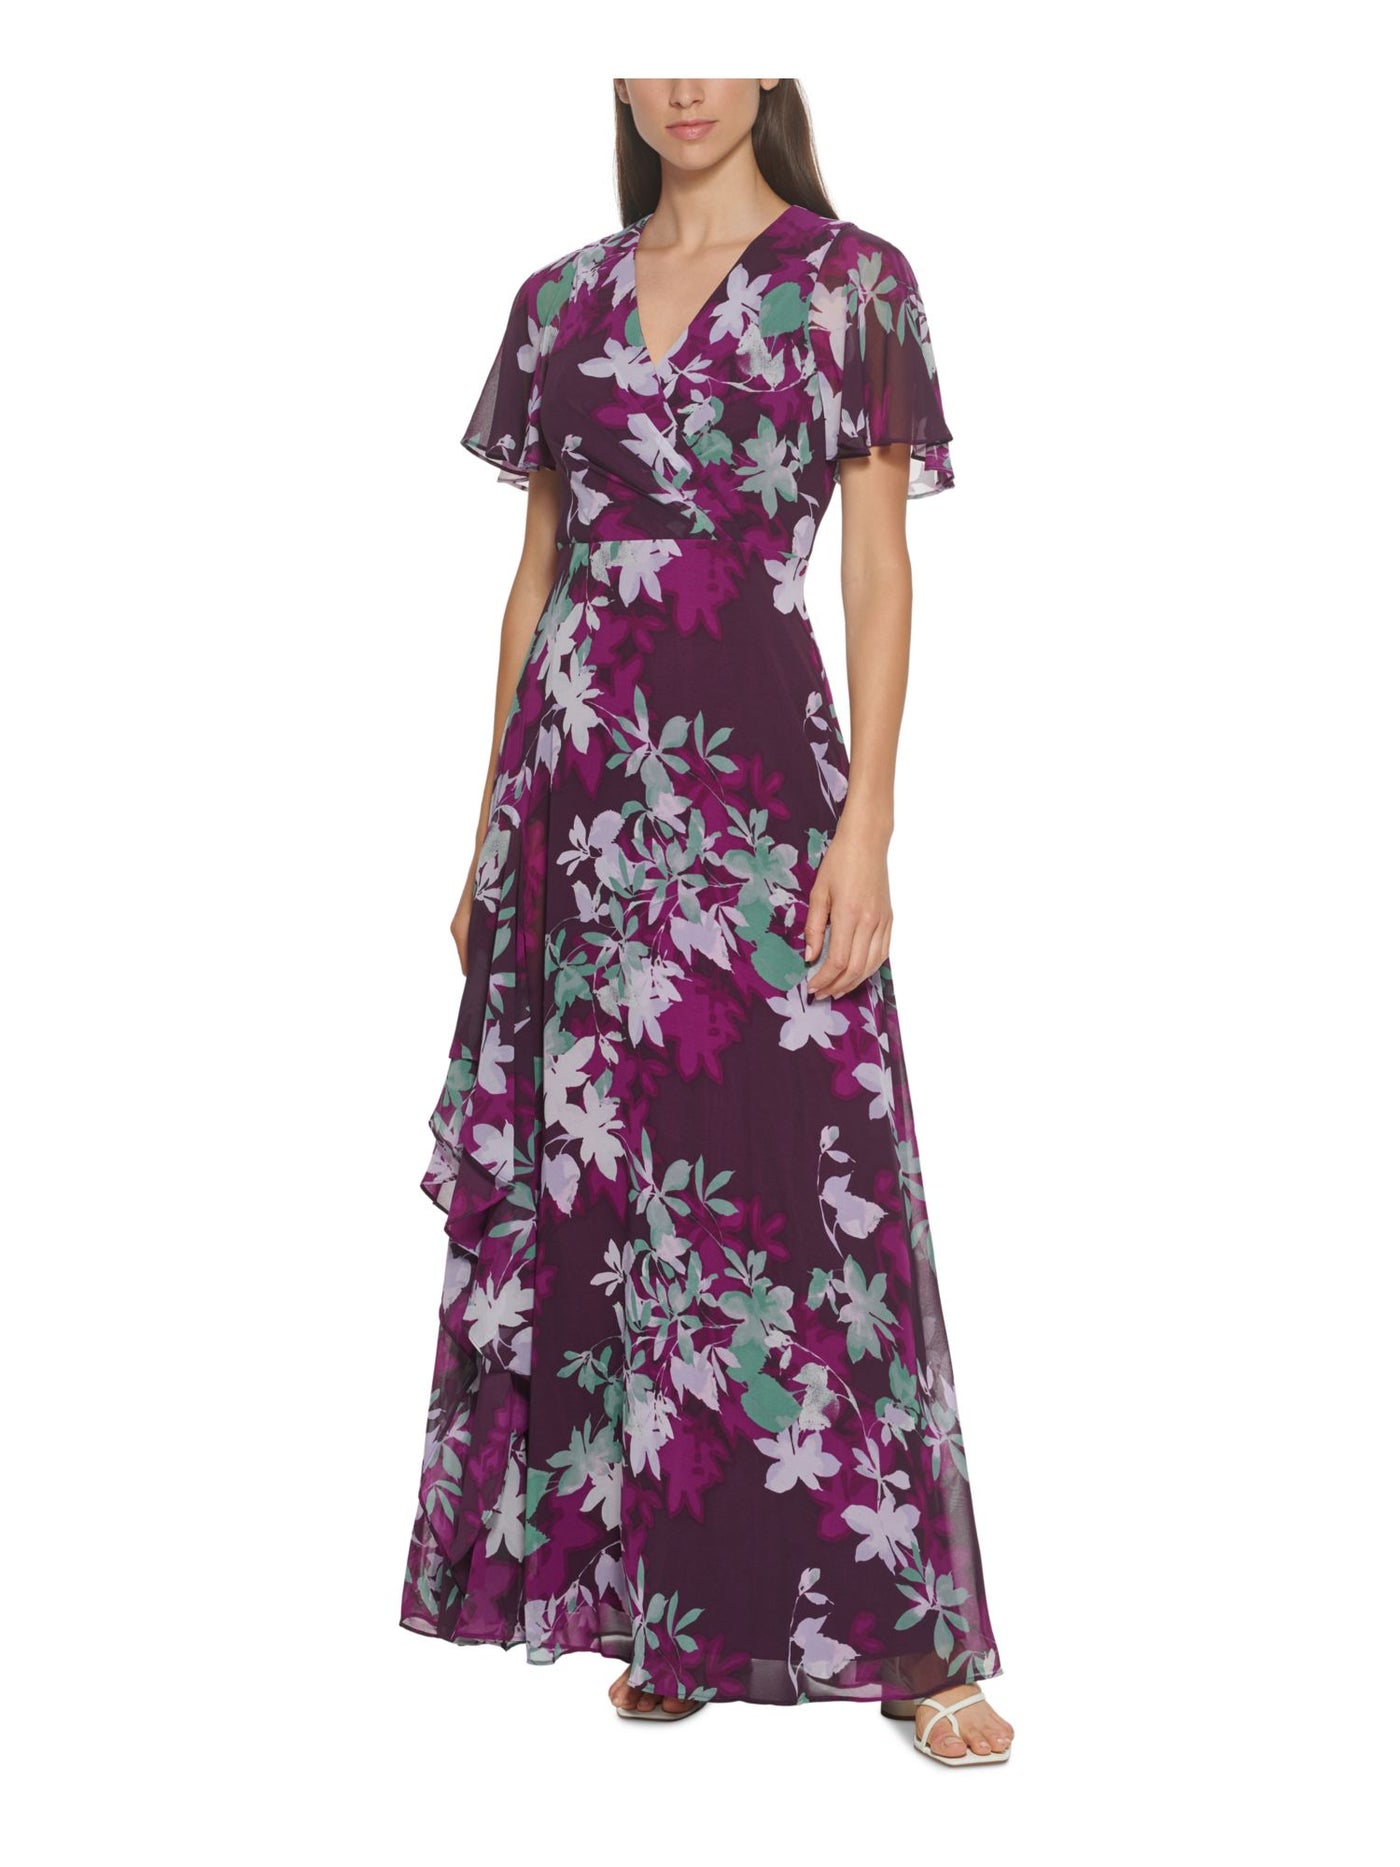 CALVIN KLEIN Womens Purple Zippered Pleated Chiffon Lined Floral Flutter Sleeve Surplice Neckline Full-Length Formal Gown Dress 4